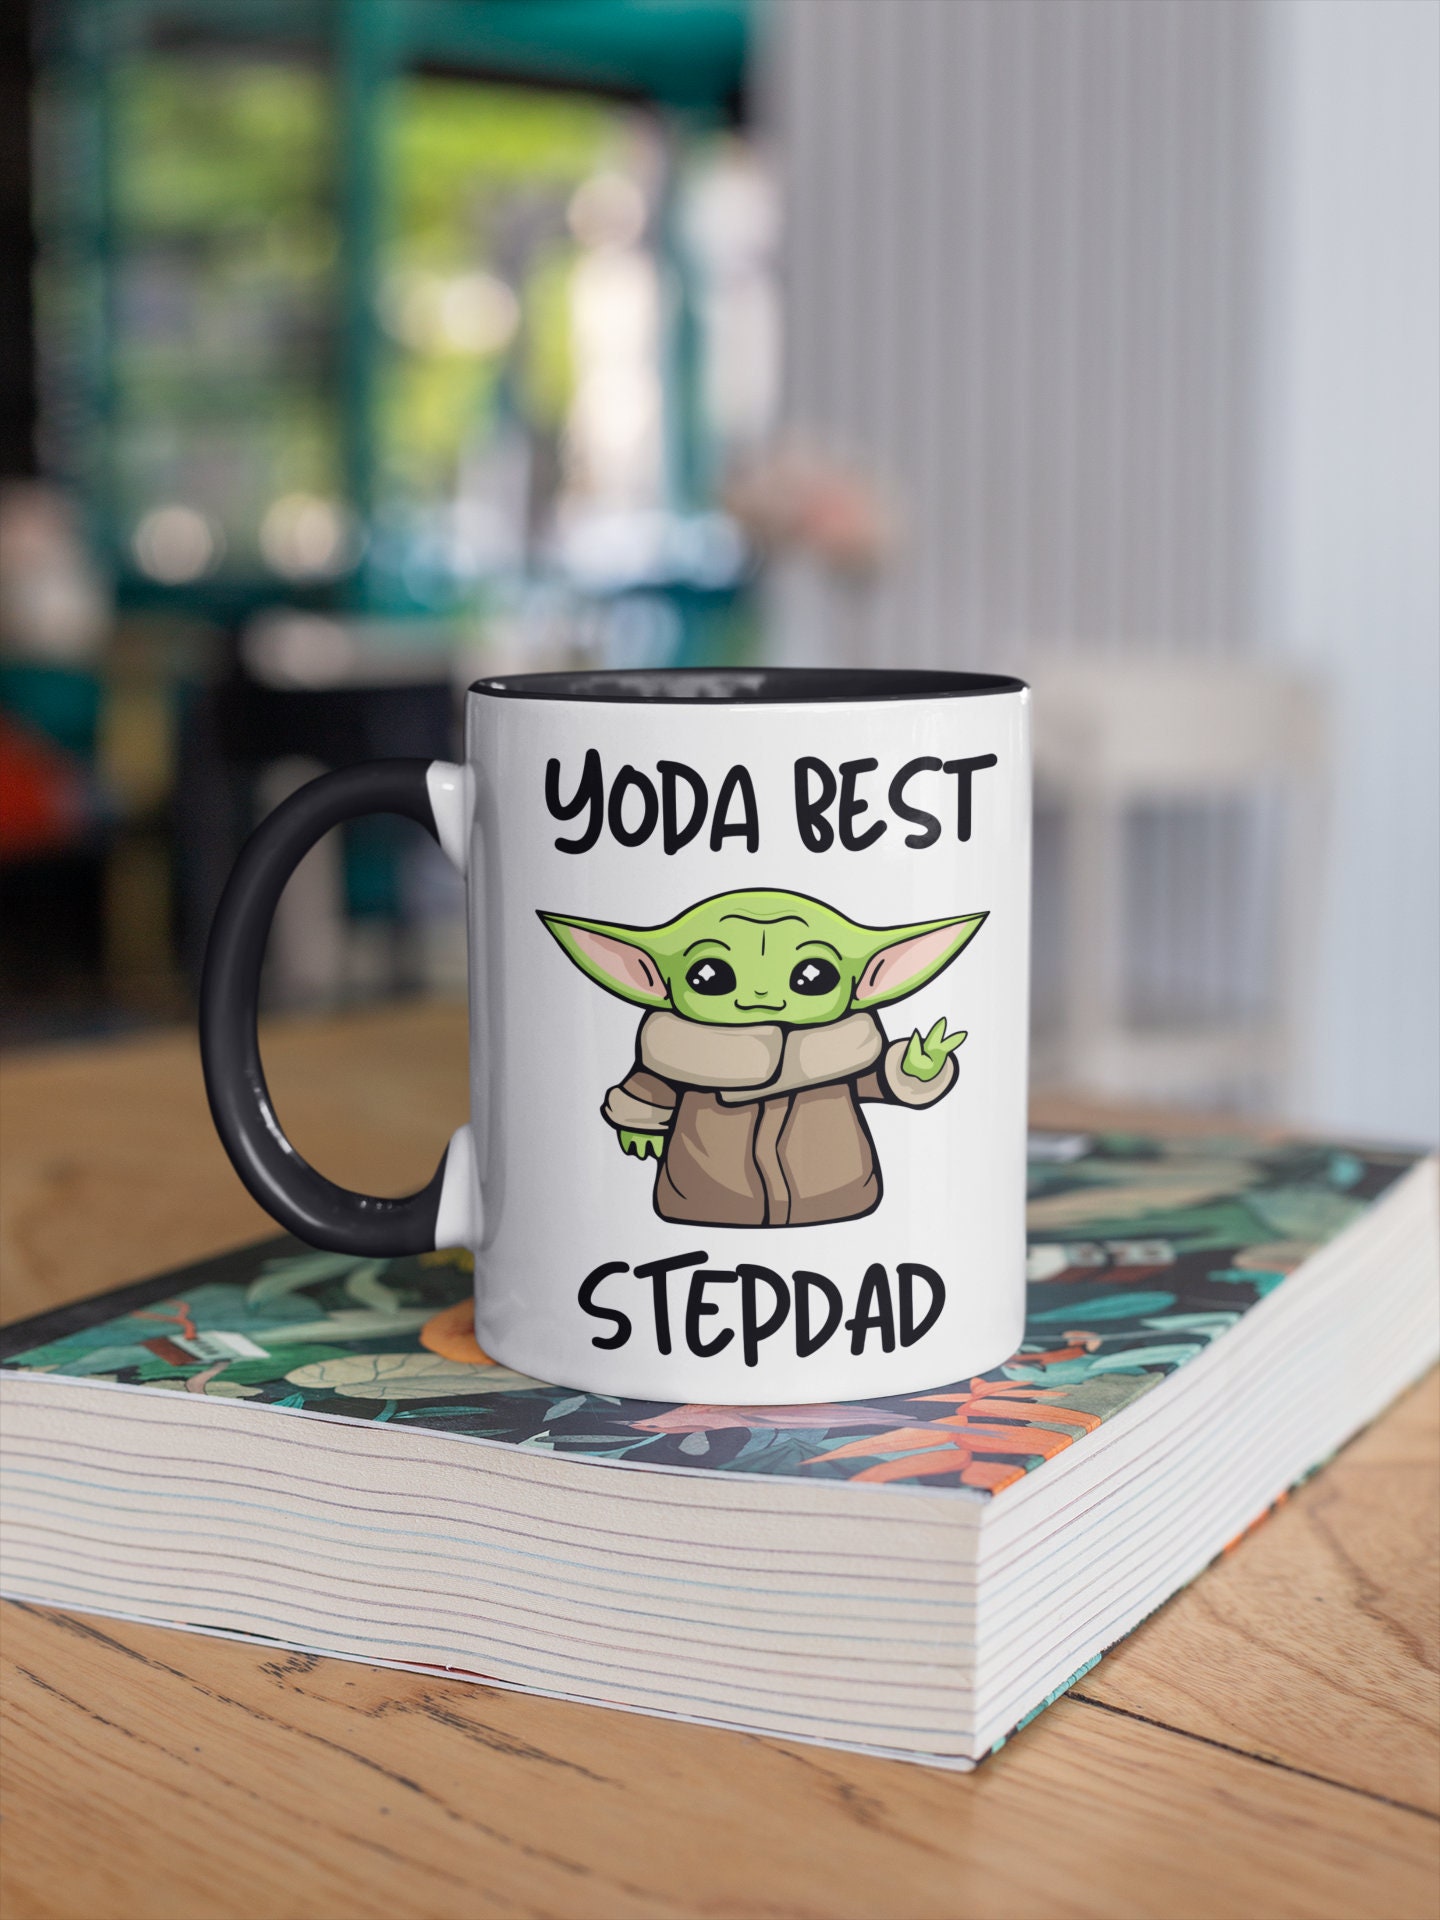 Yoda Best Funny Star Wars Custom Text Name Mug Gift - Trends Bedding